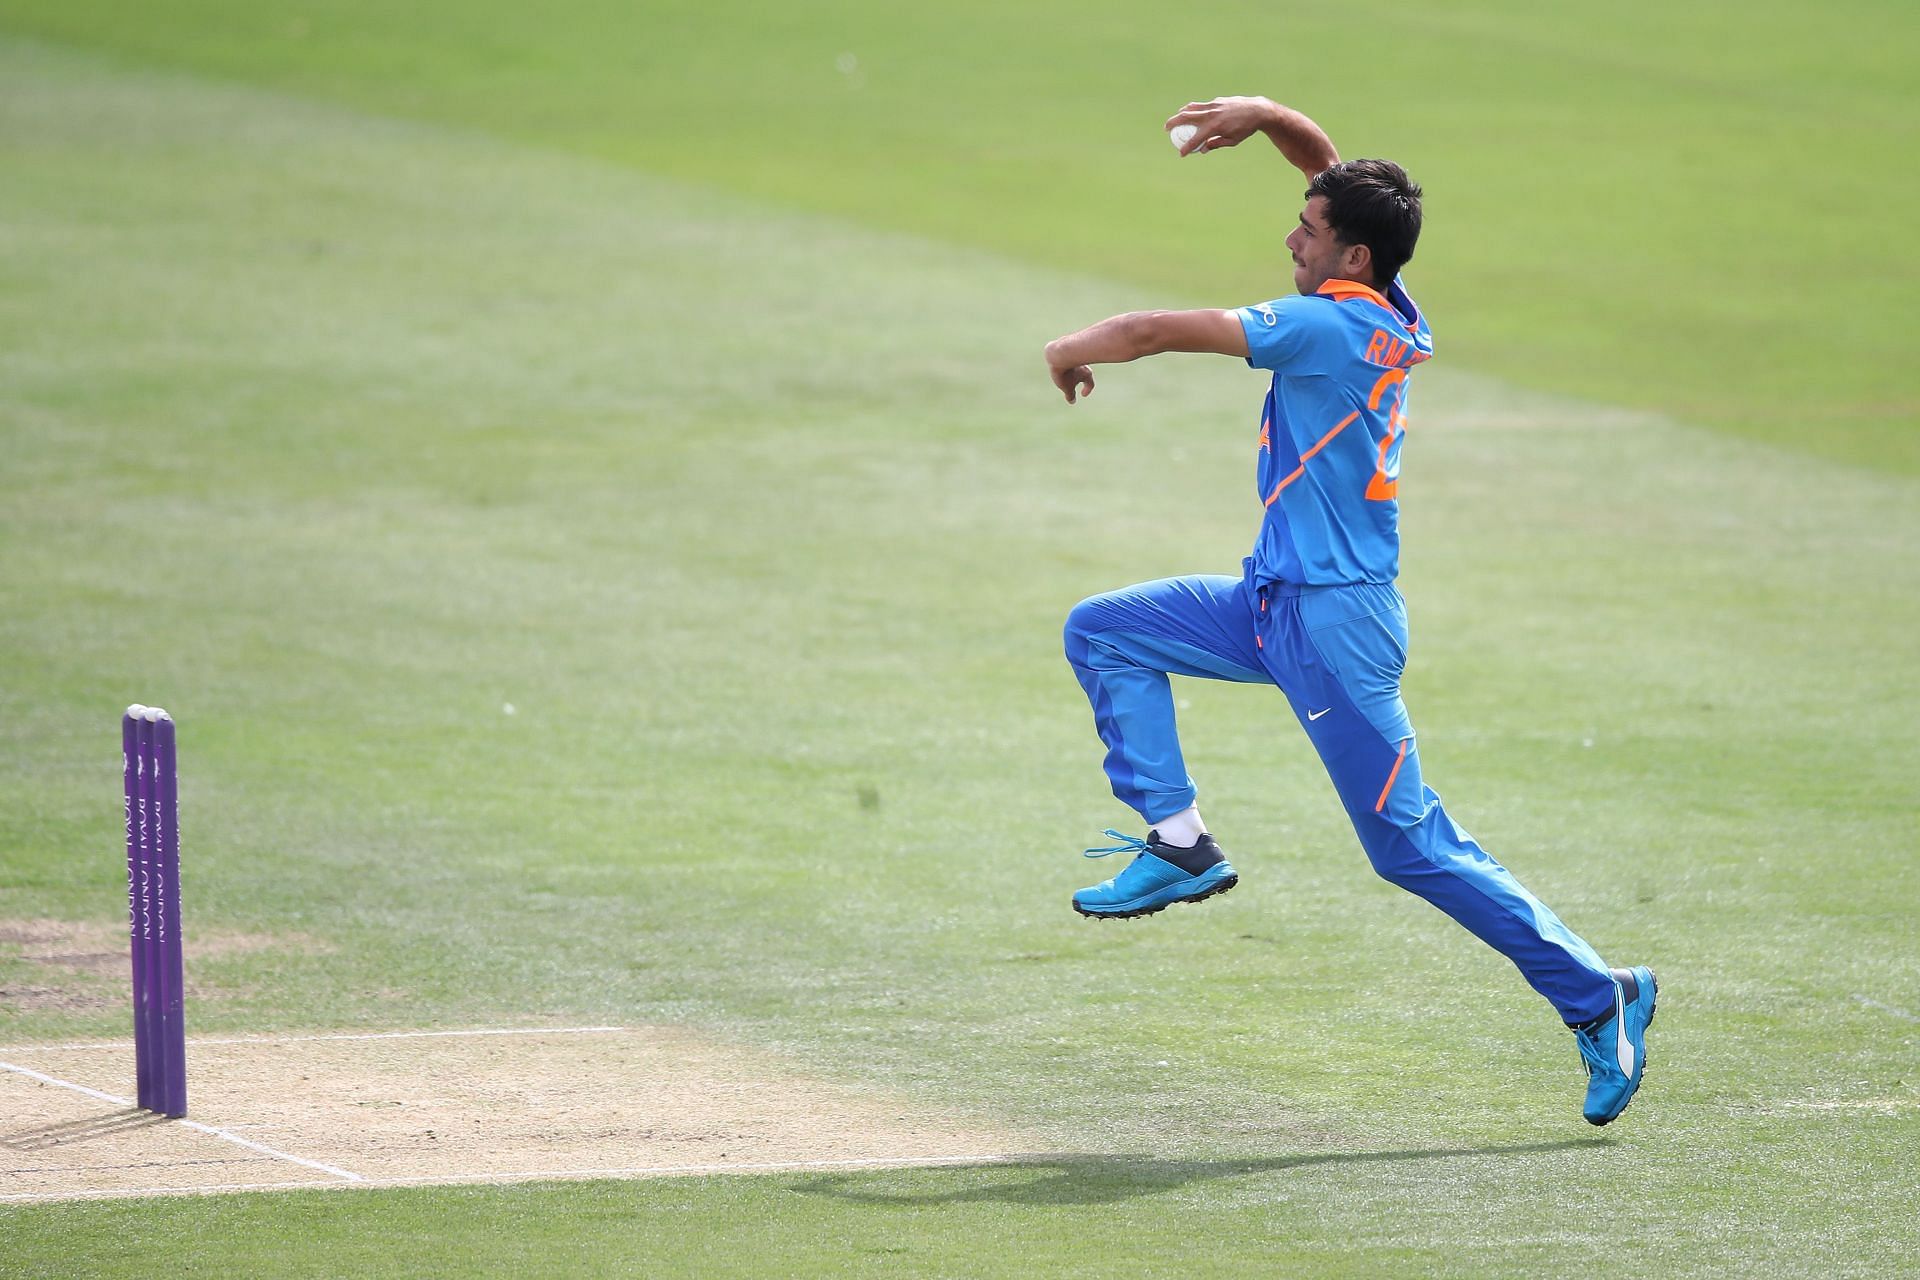 Ravi Bishnoi has played international cricket for India (Image courtesy: Getty Images)